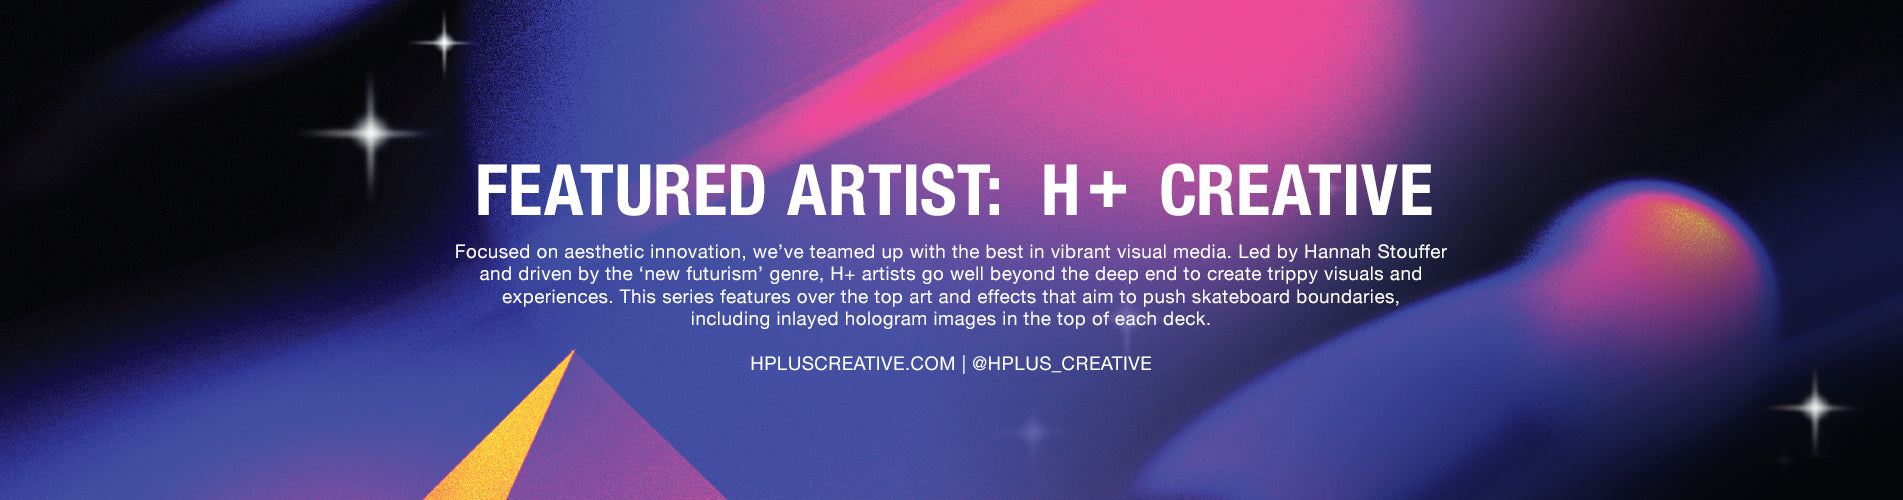 H+ Creatieve banner